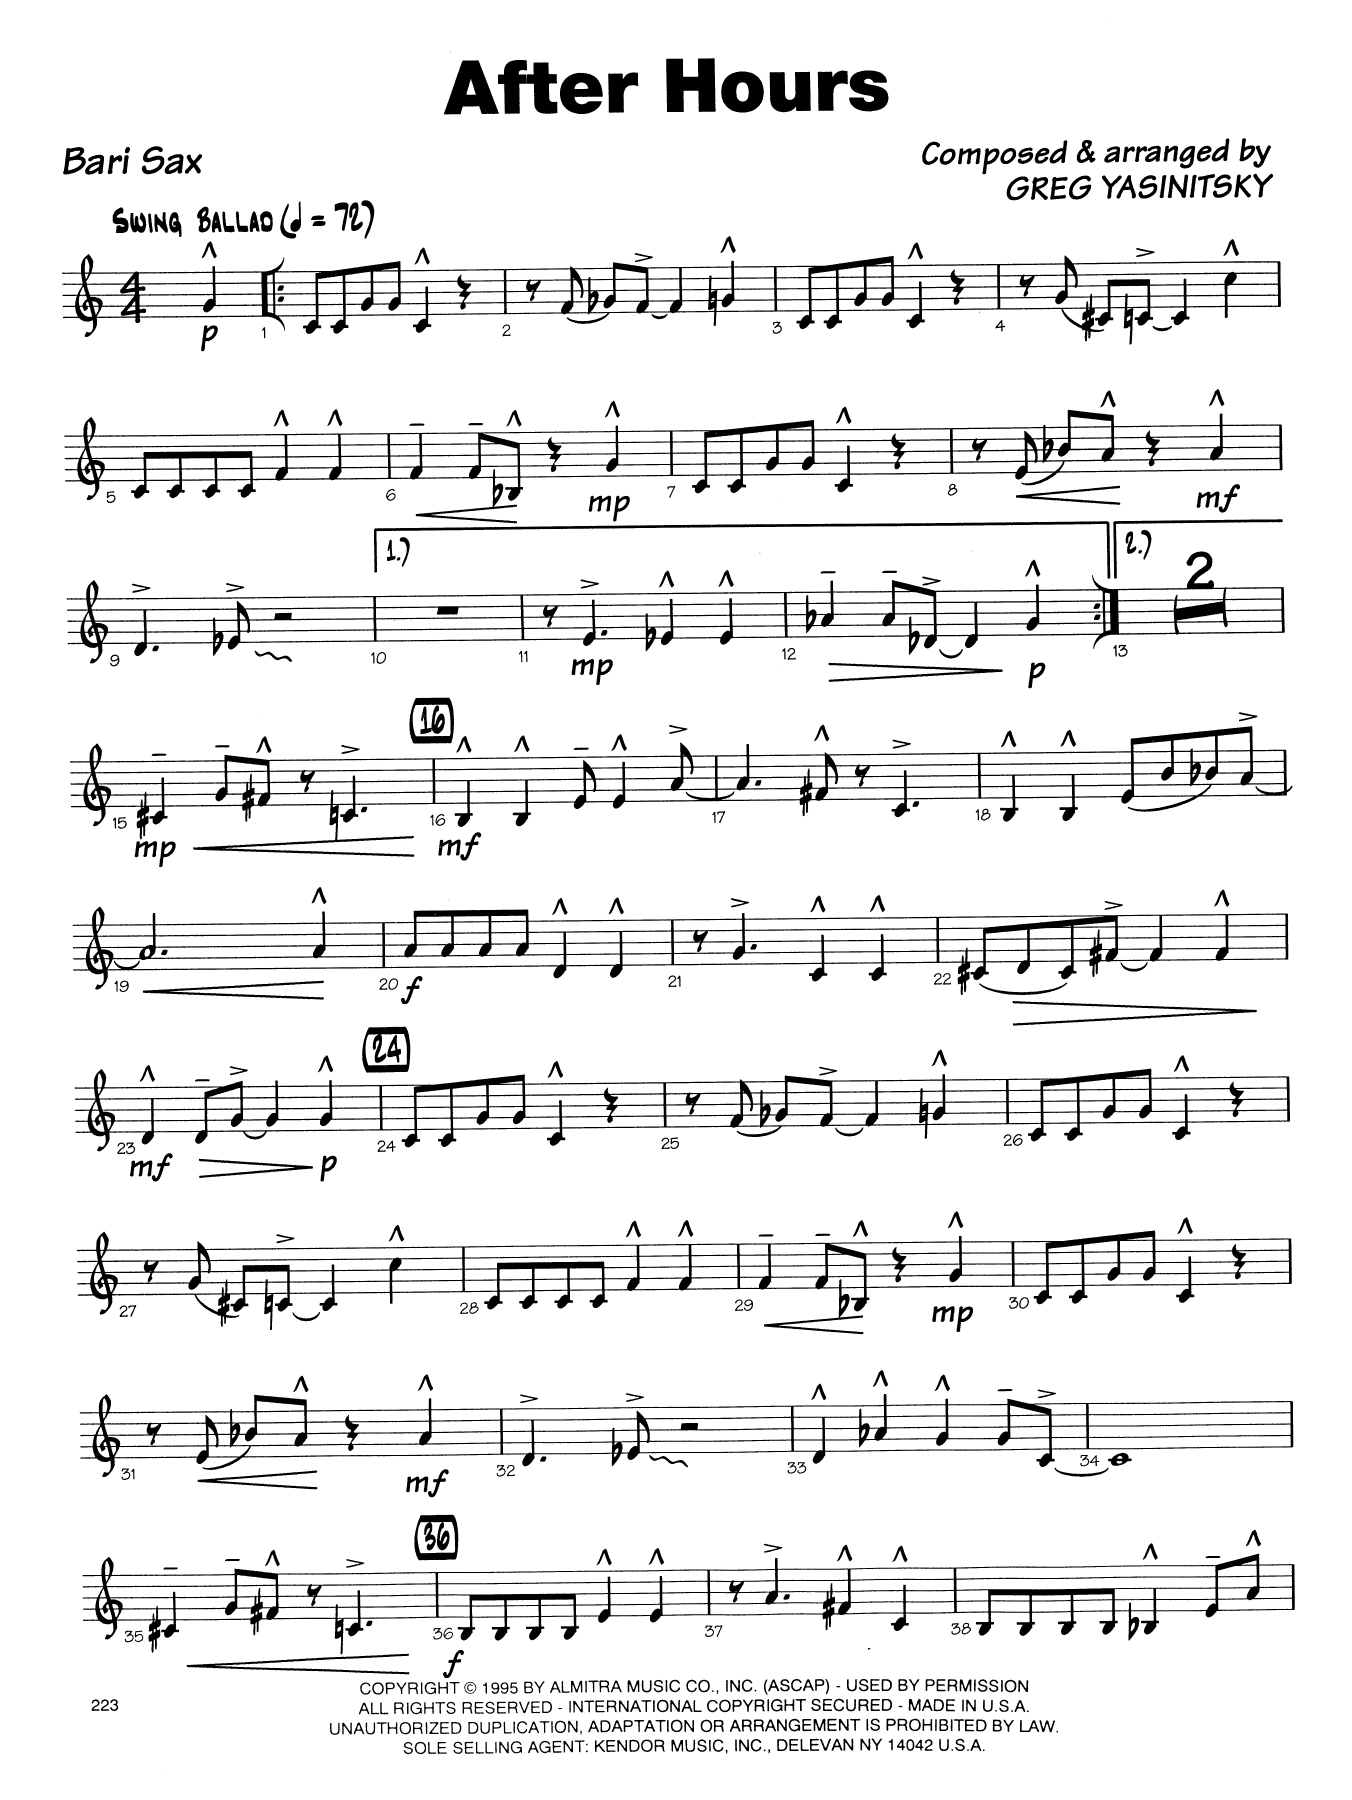 Download Gregory Yasinitsky After Hours - Eb Baritone Saxophone Sheet Music